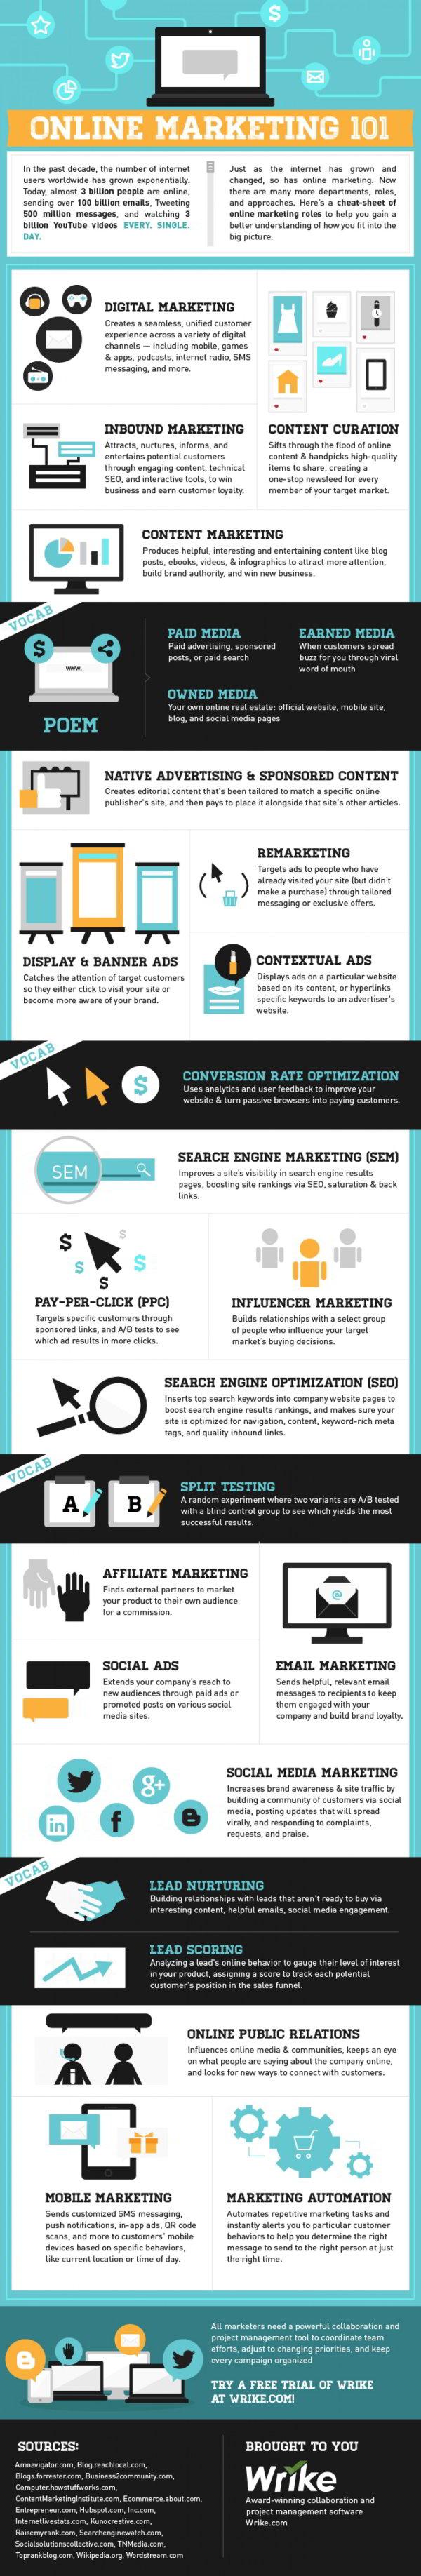 Panorama du marketing digital #infographie